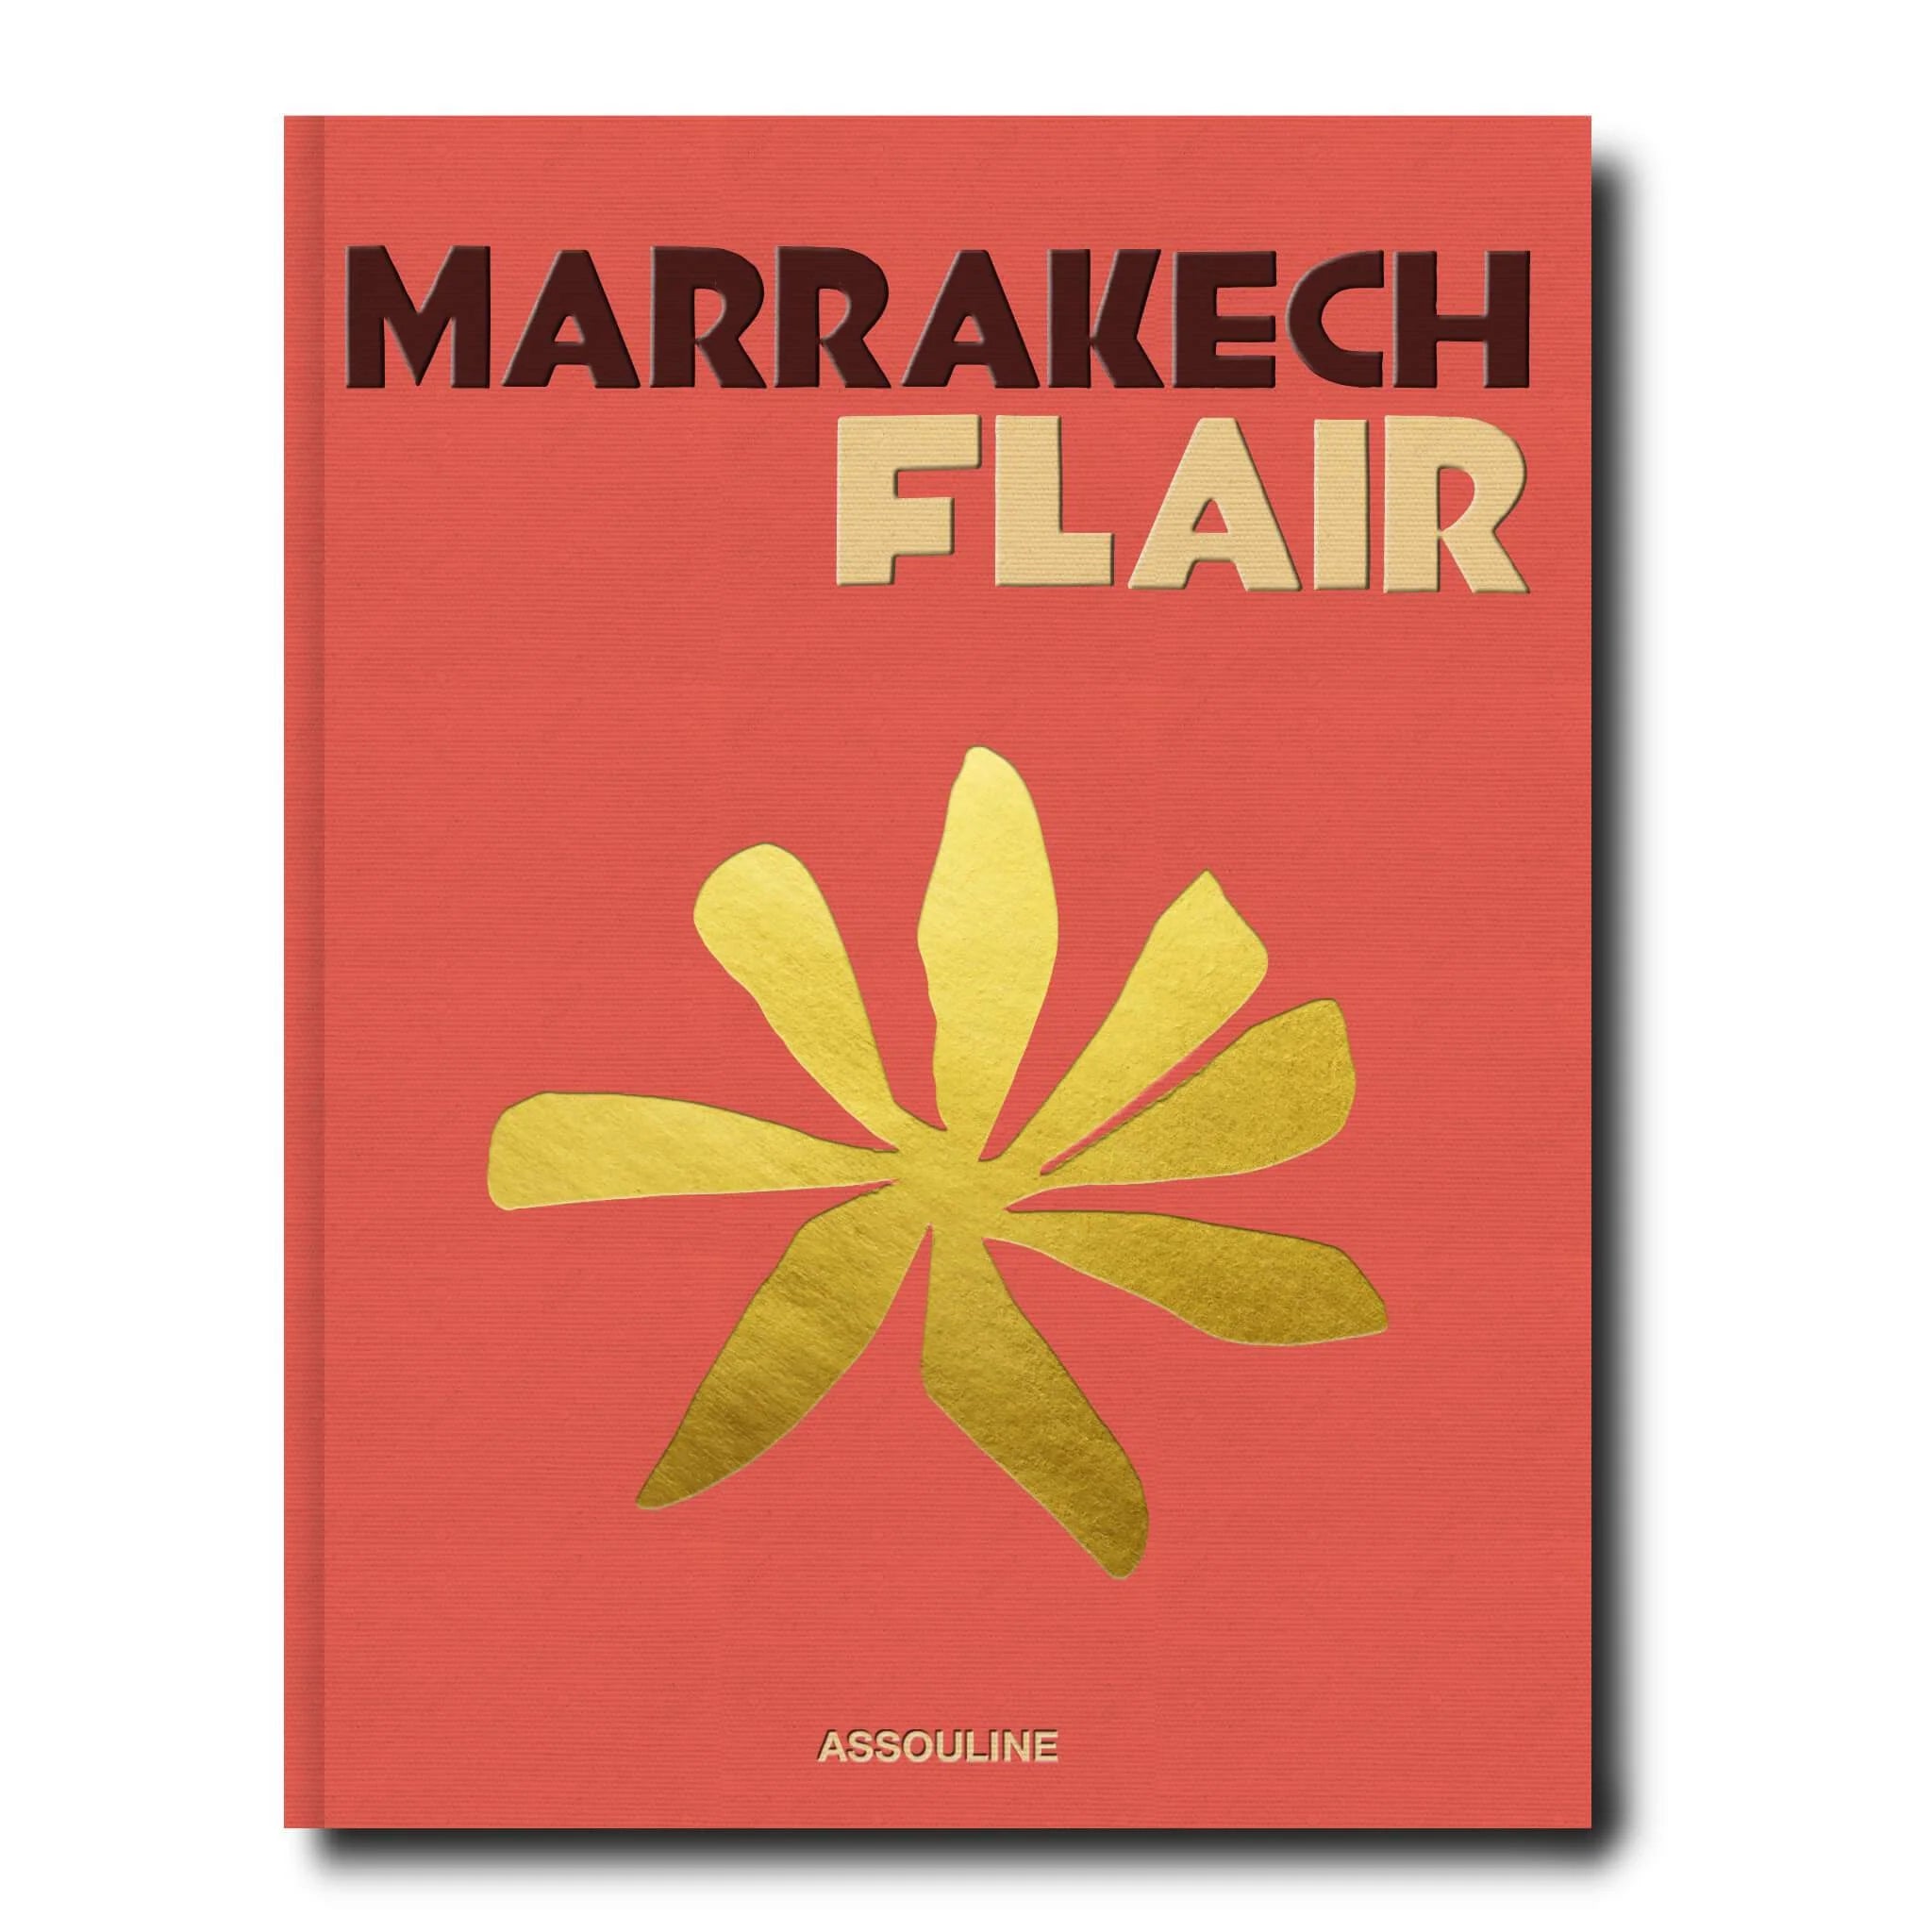 MARRAKECH FLAIR, libro decorativo grande de la editorial Assouline